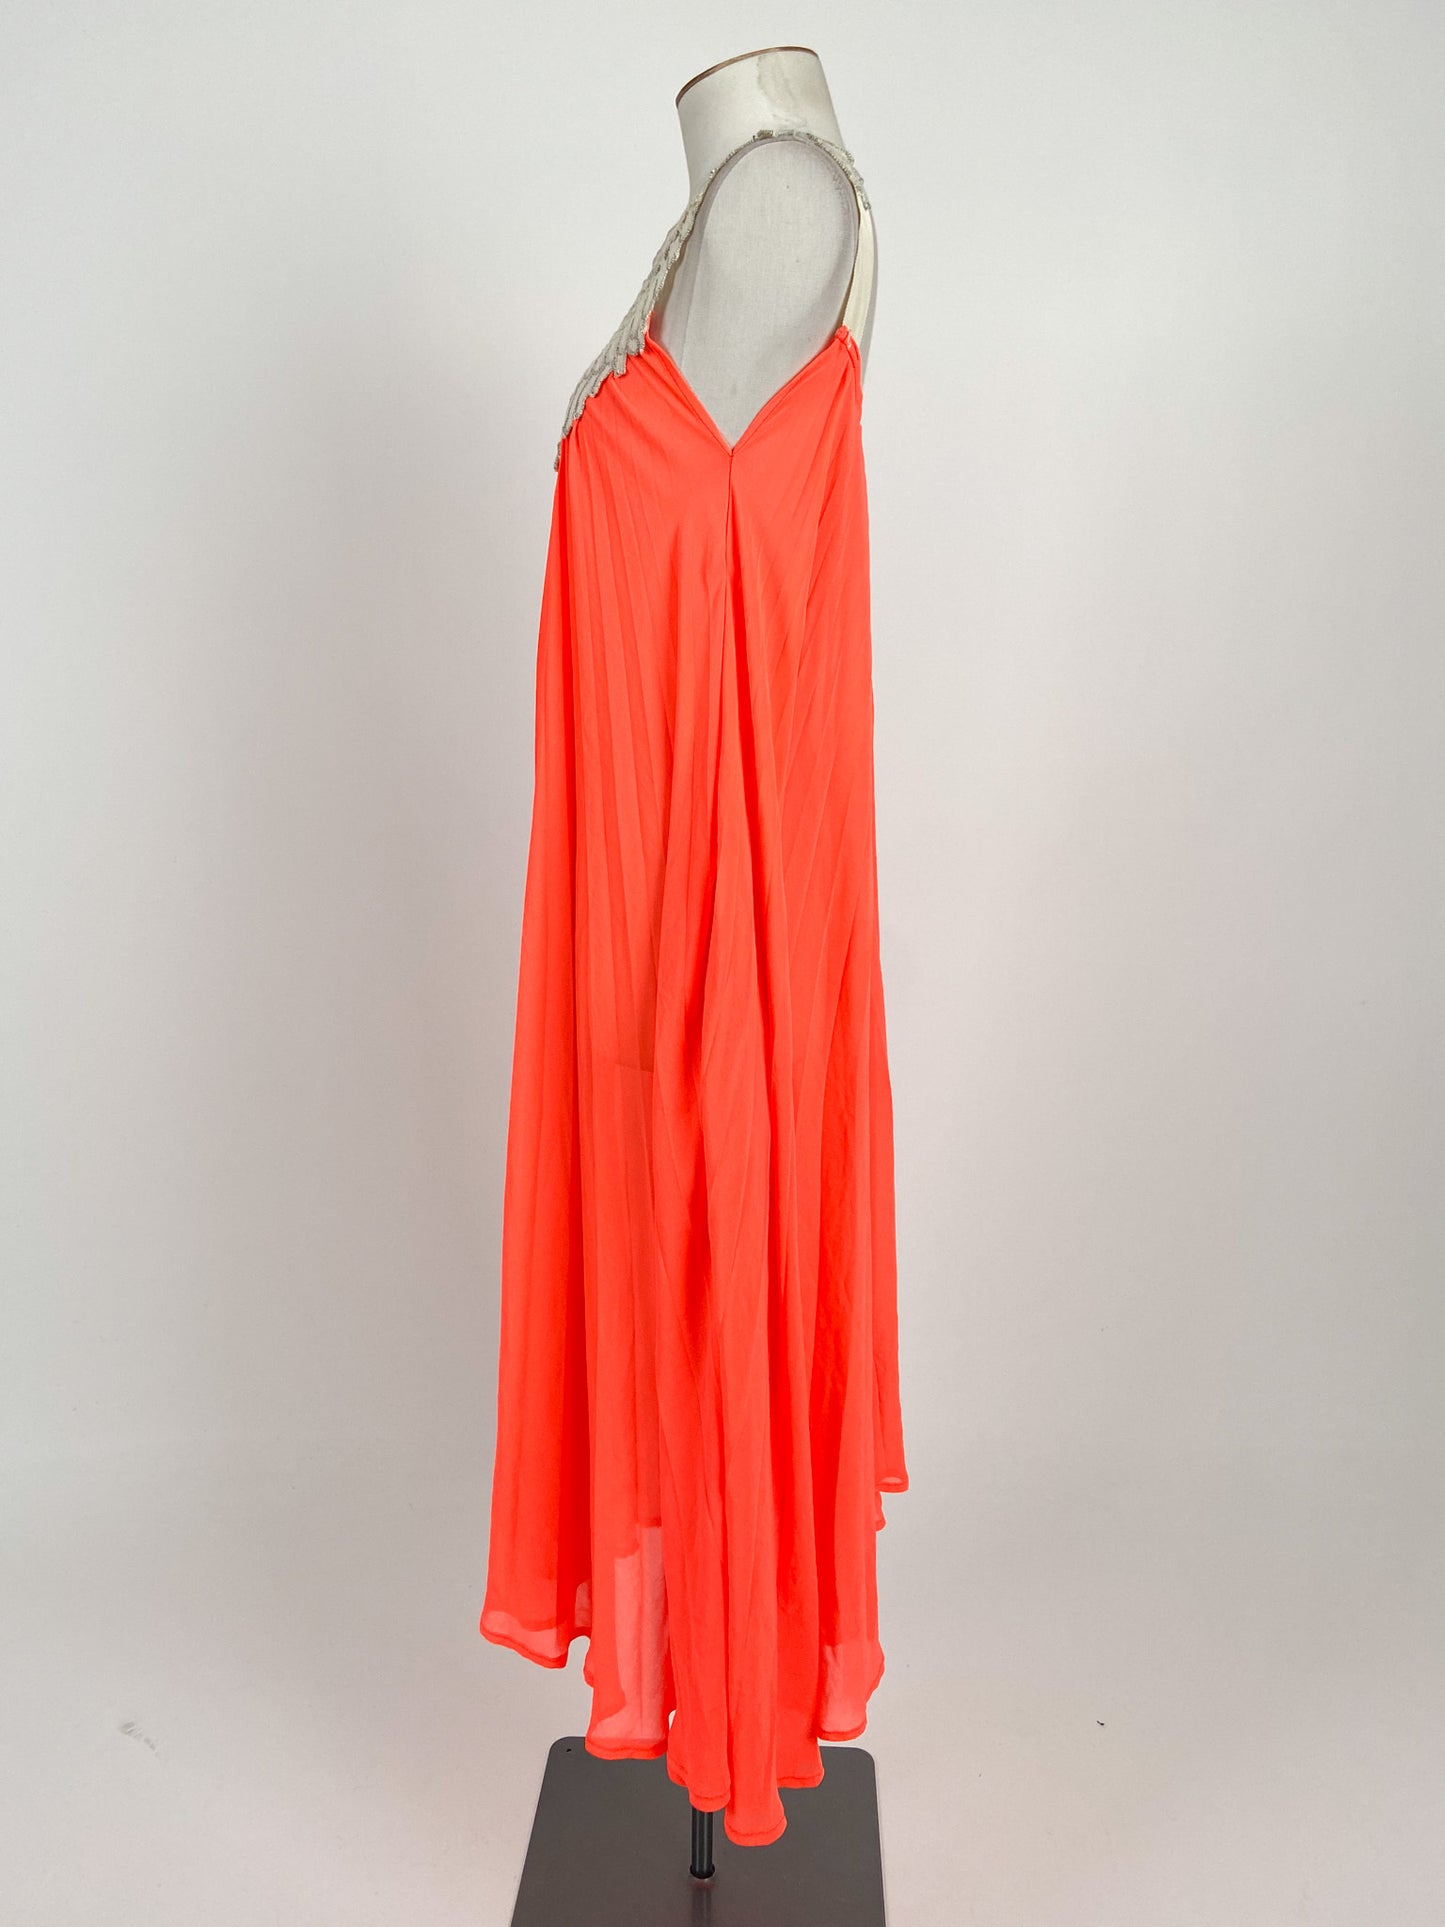 Andrea Moore | Orange Cocktail Dress | Size S